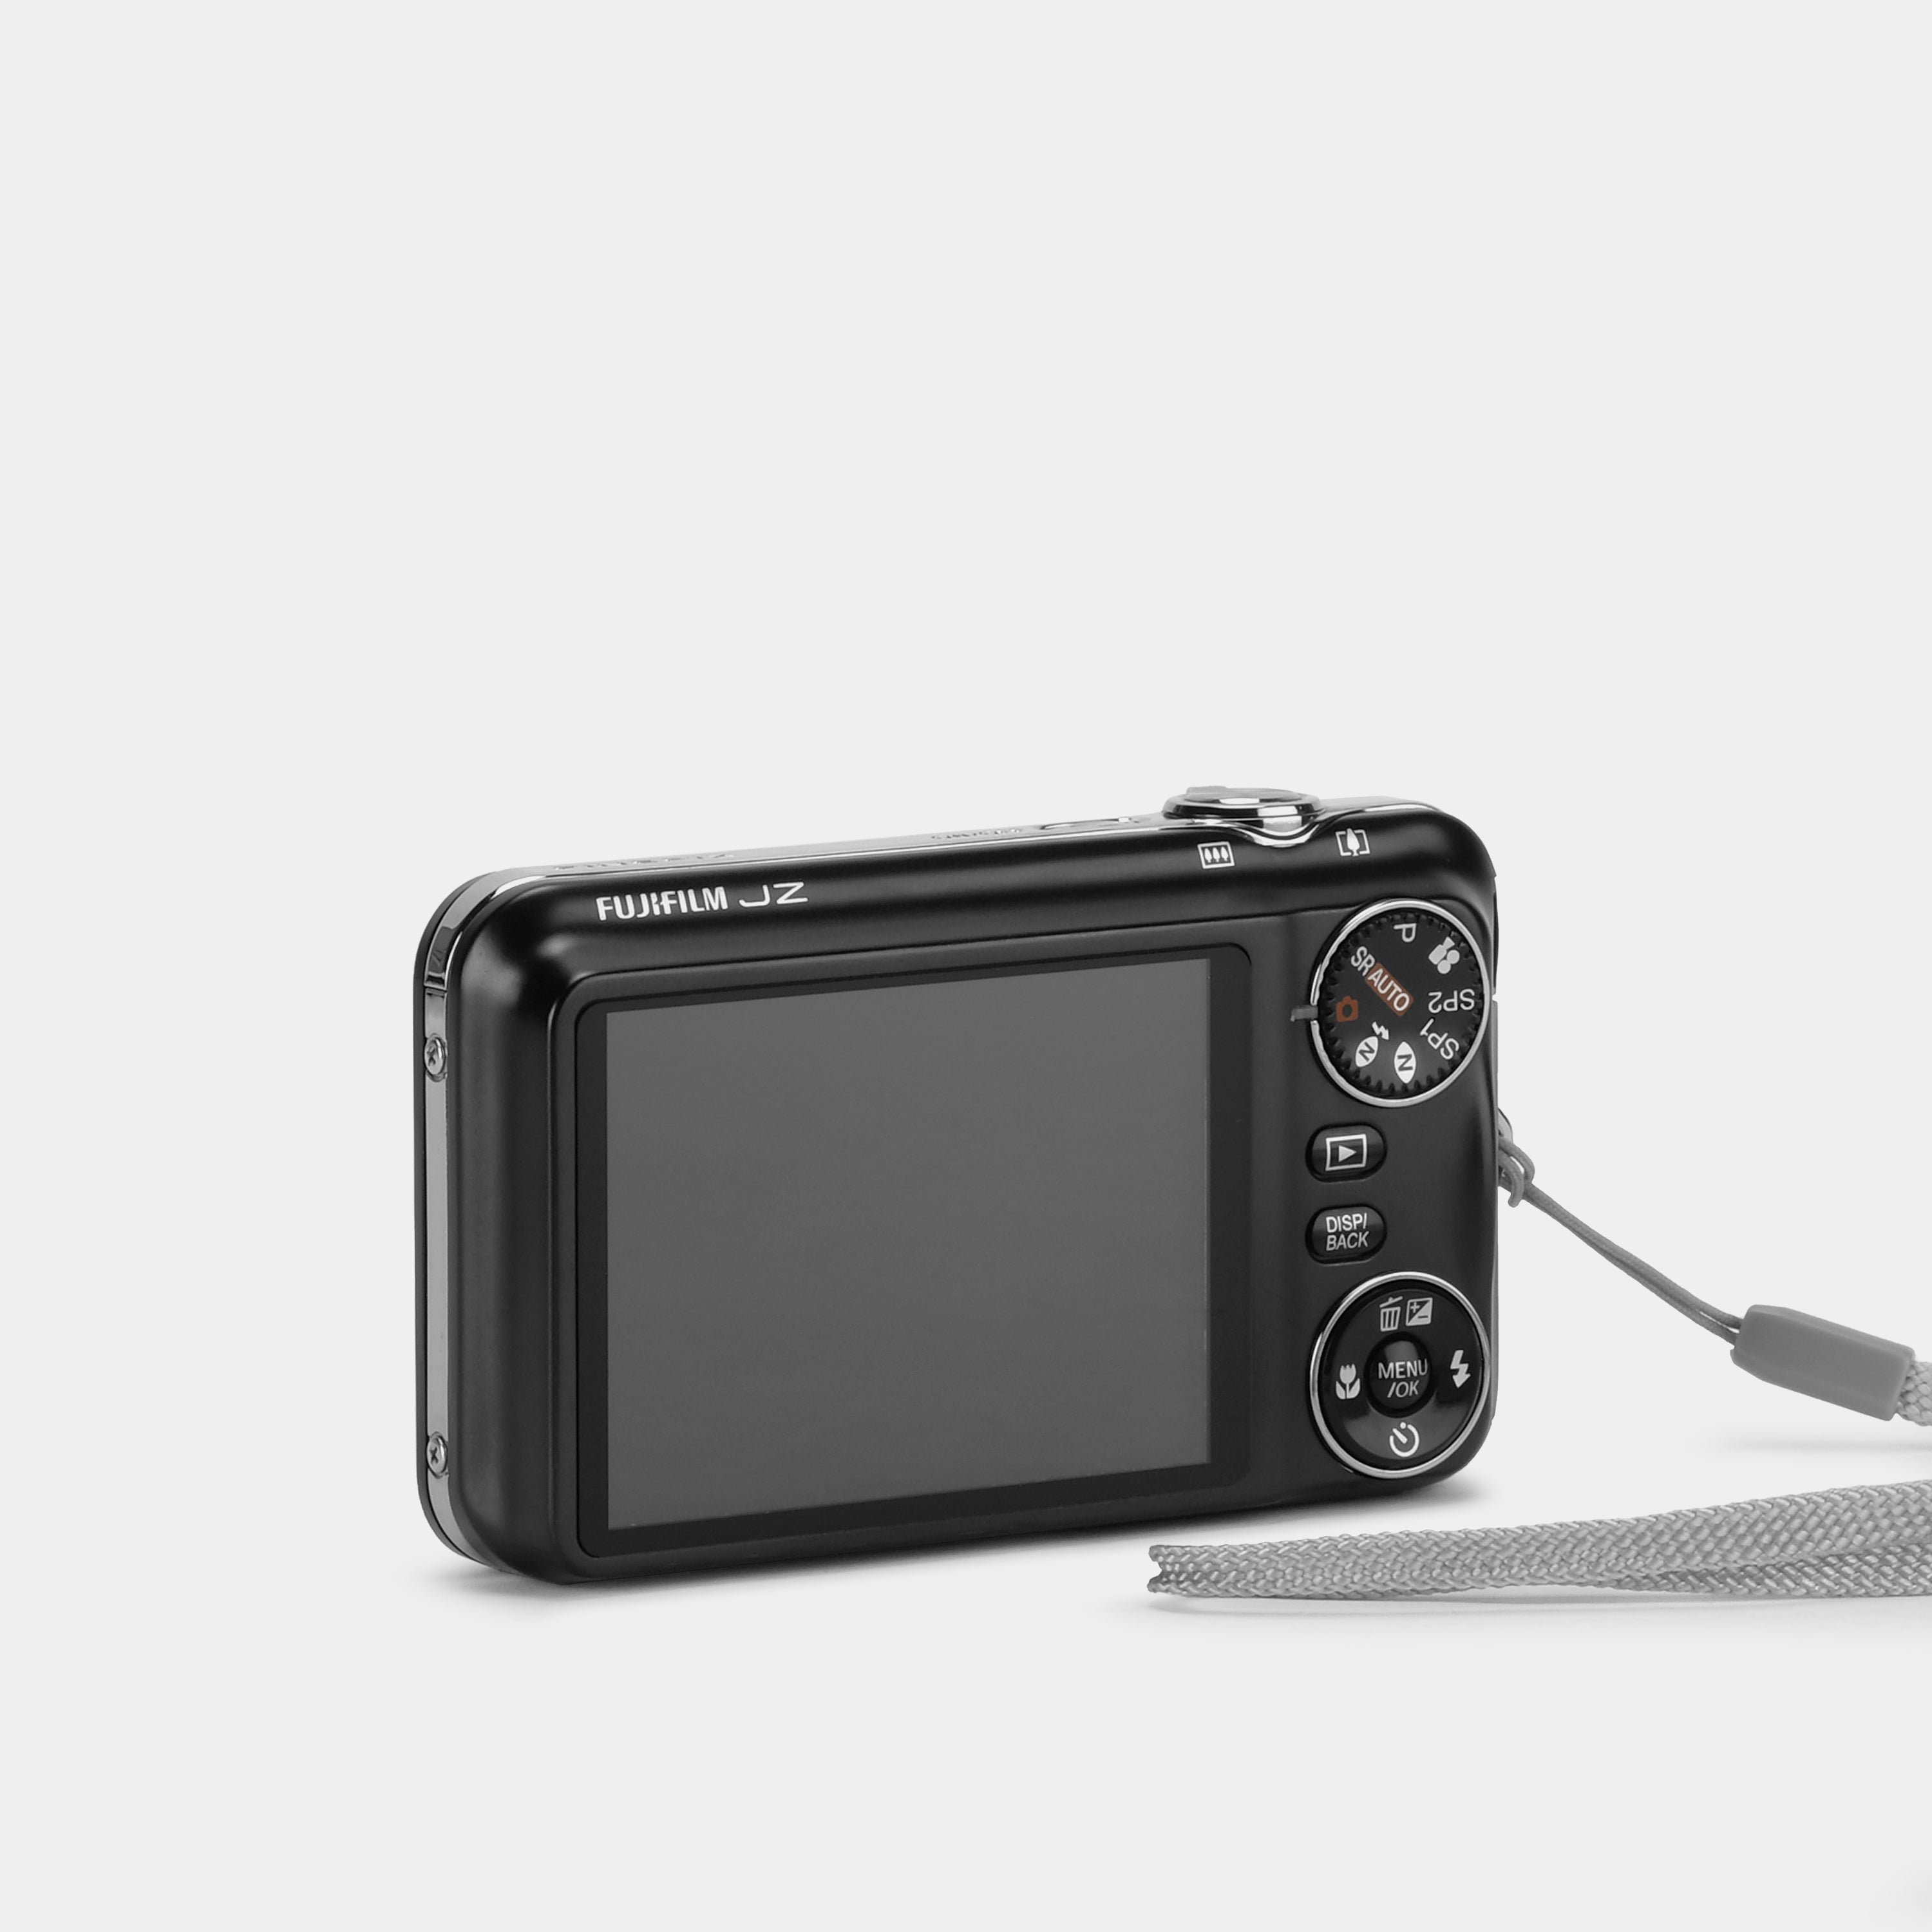 Fujifilm FinePix JZ300 Point and Shoot Digital Camera